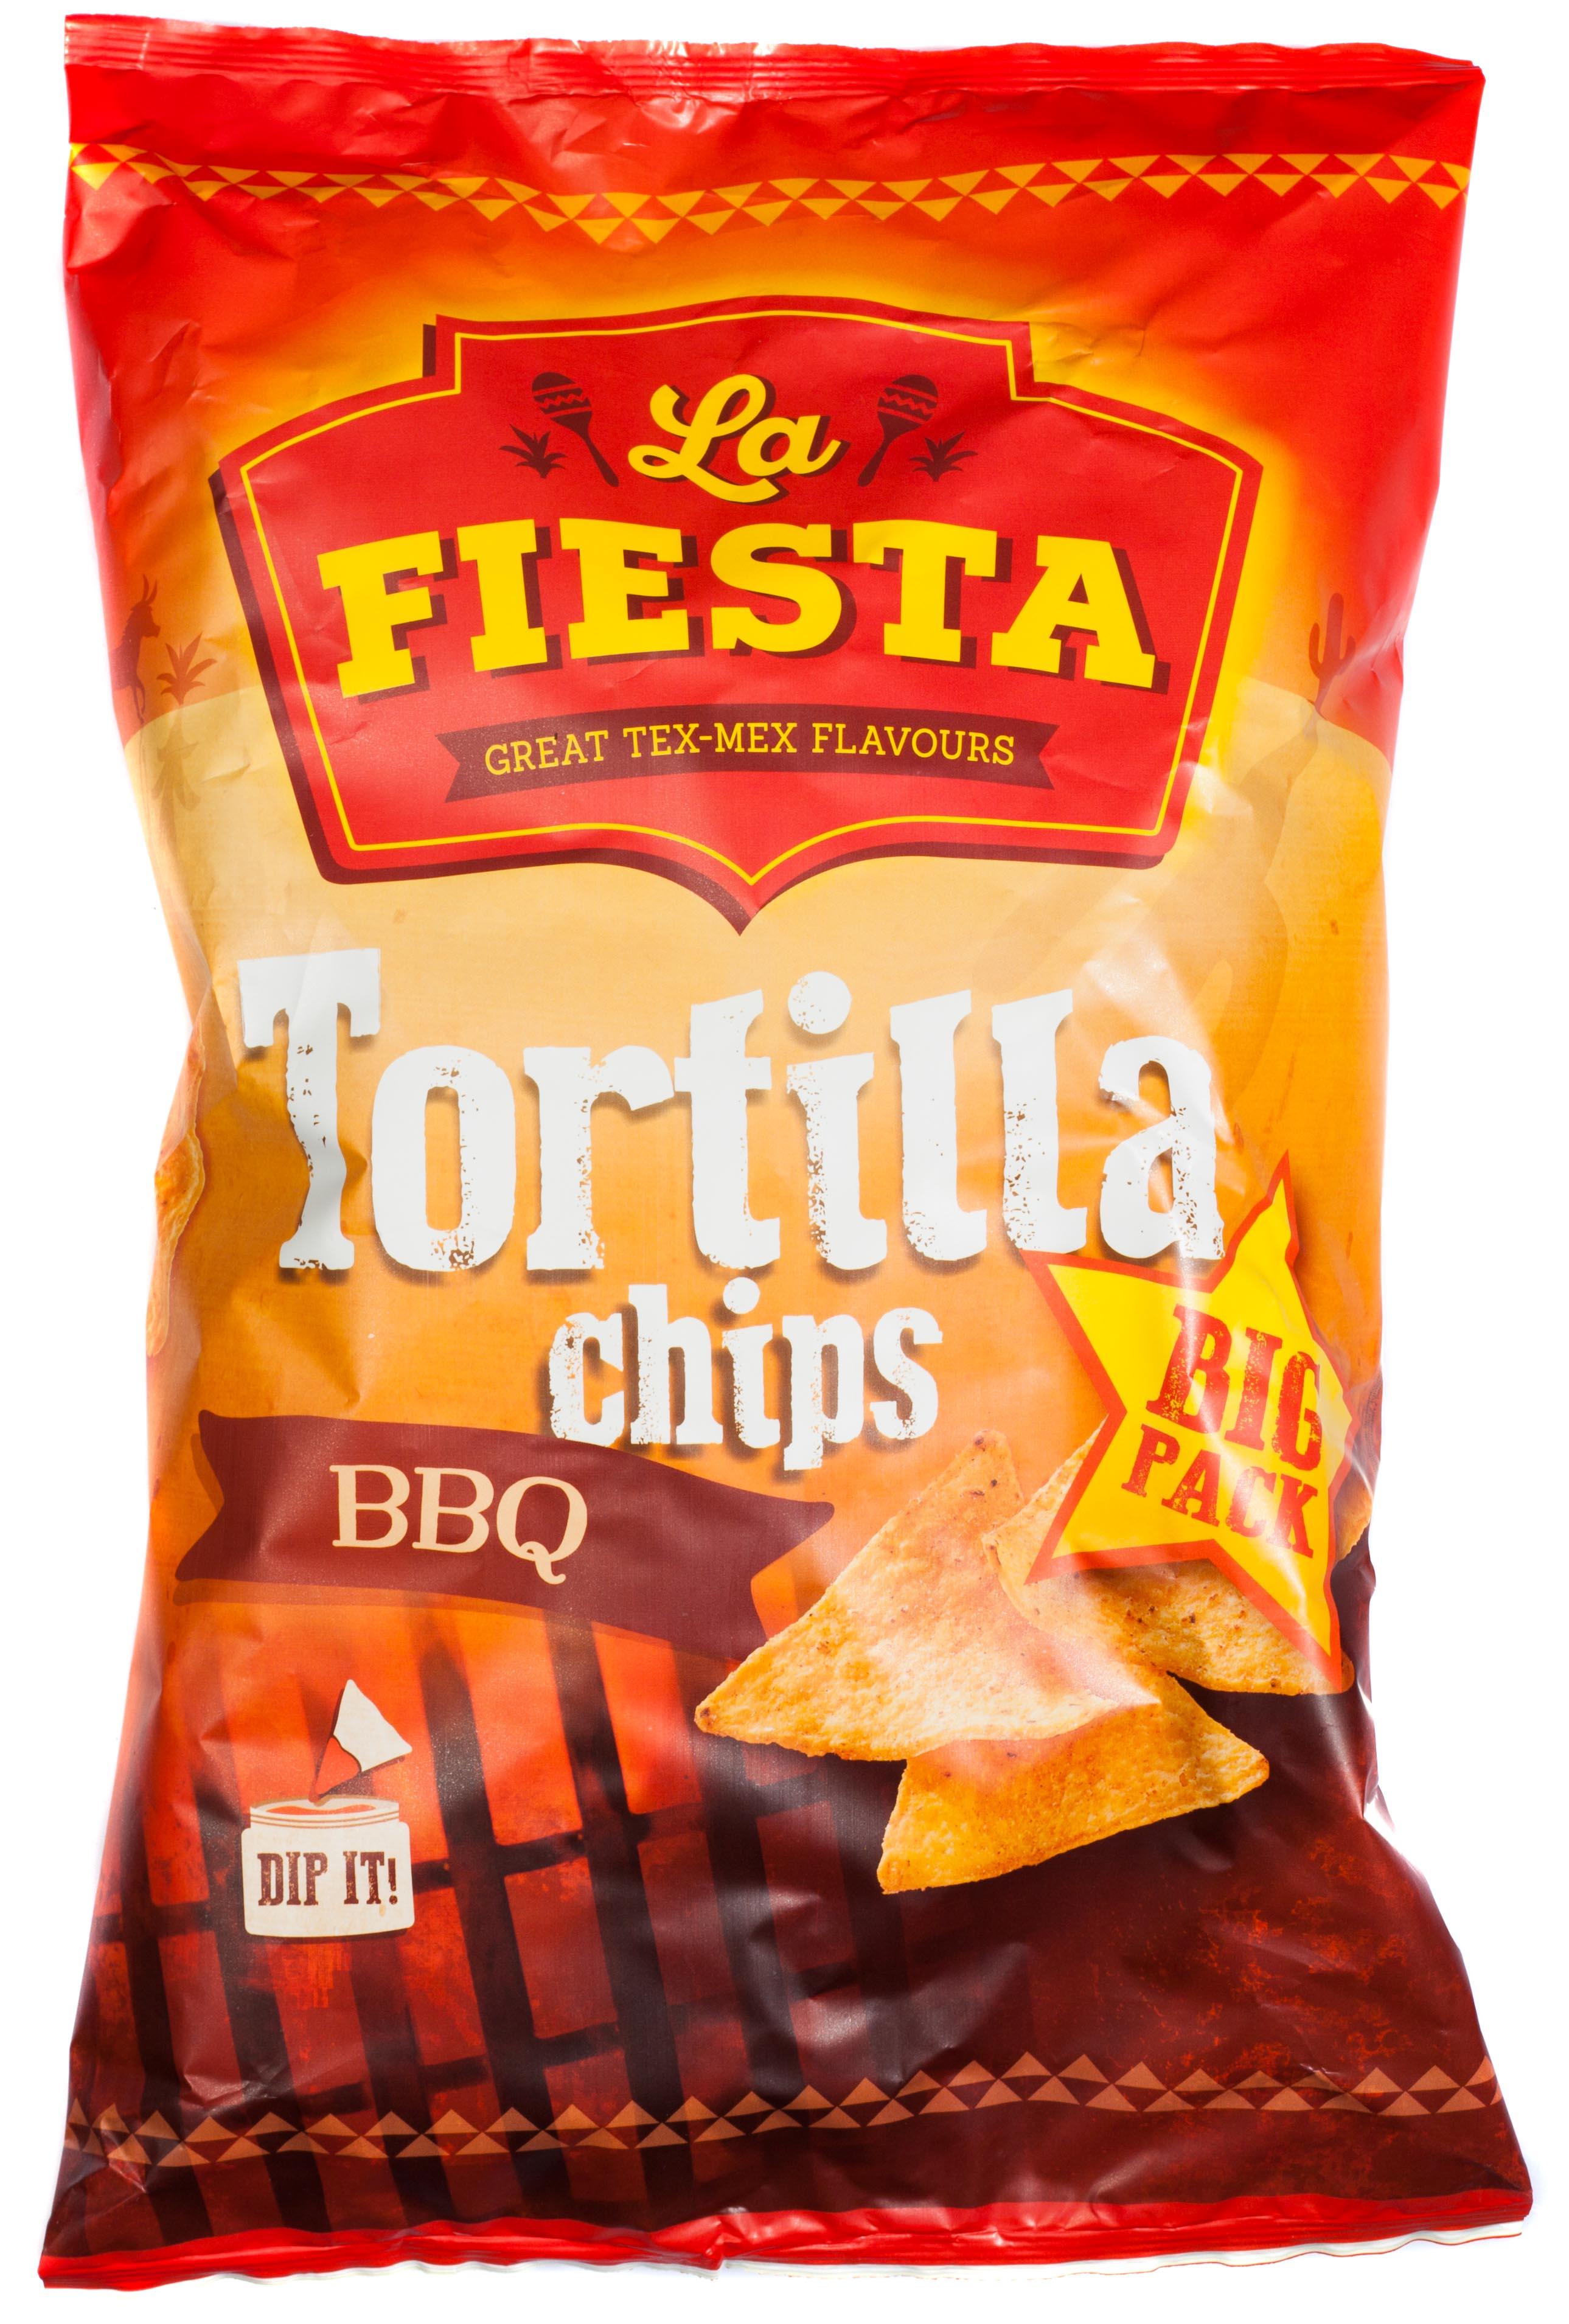 La Fiesta Tortilla Chips BBQ, 750g